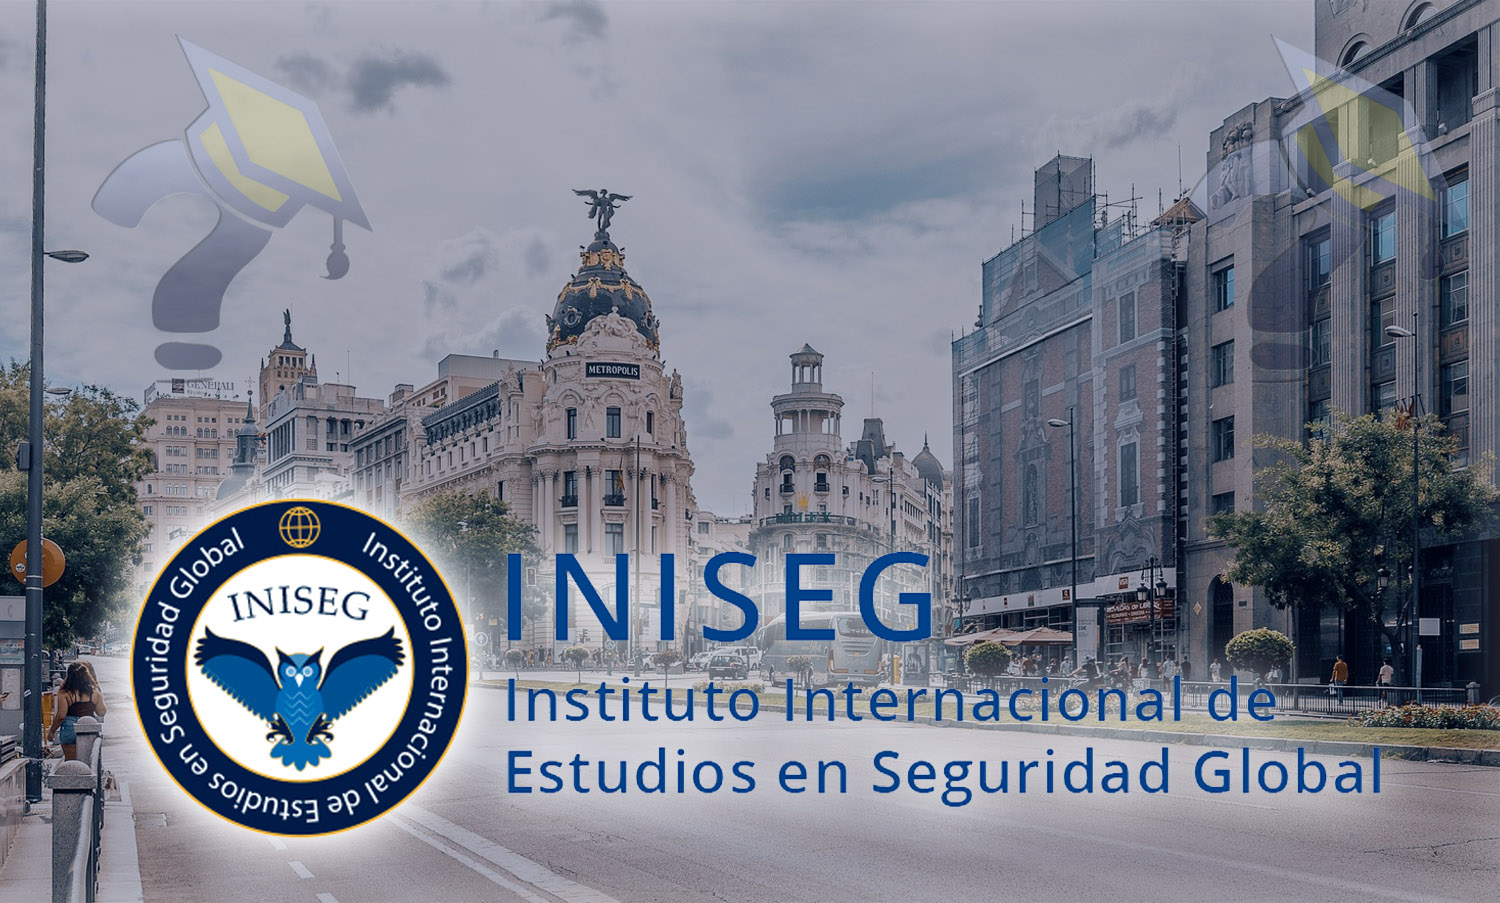 INISEG - Instituto Internacional de Estudios en Seguridad Global